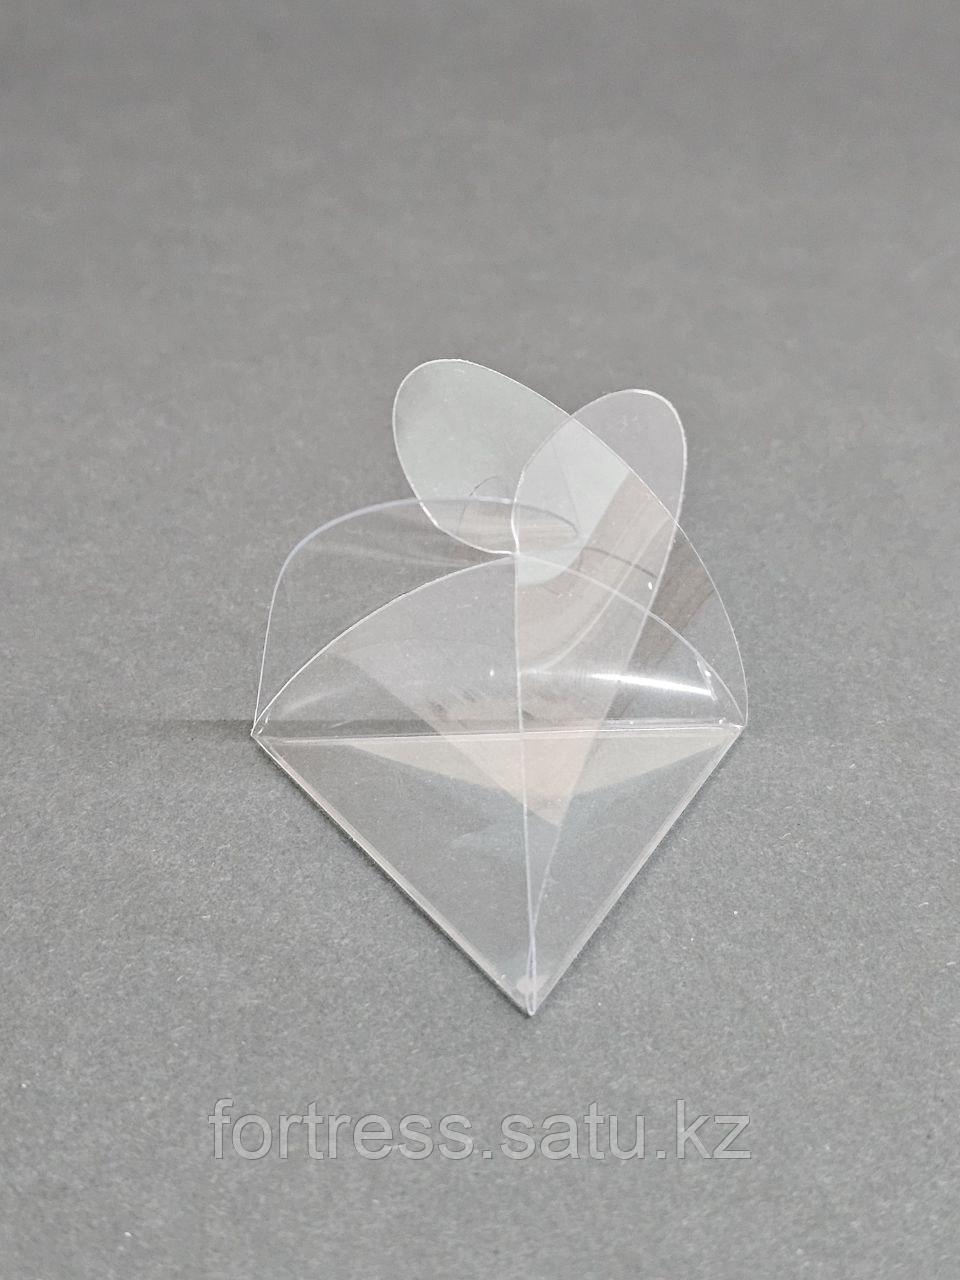 П264 - треугольник 4*4*2,5. Коробка из пластика для конфетки